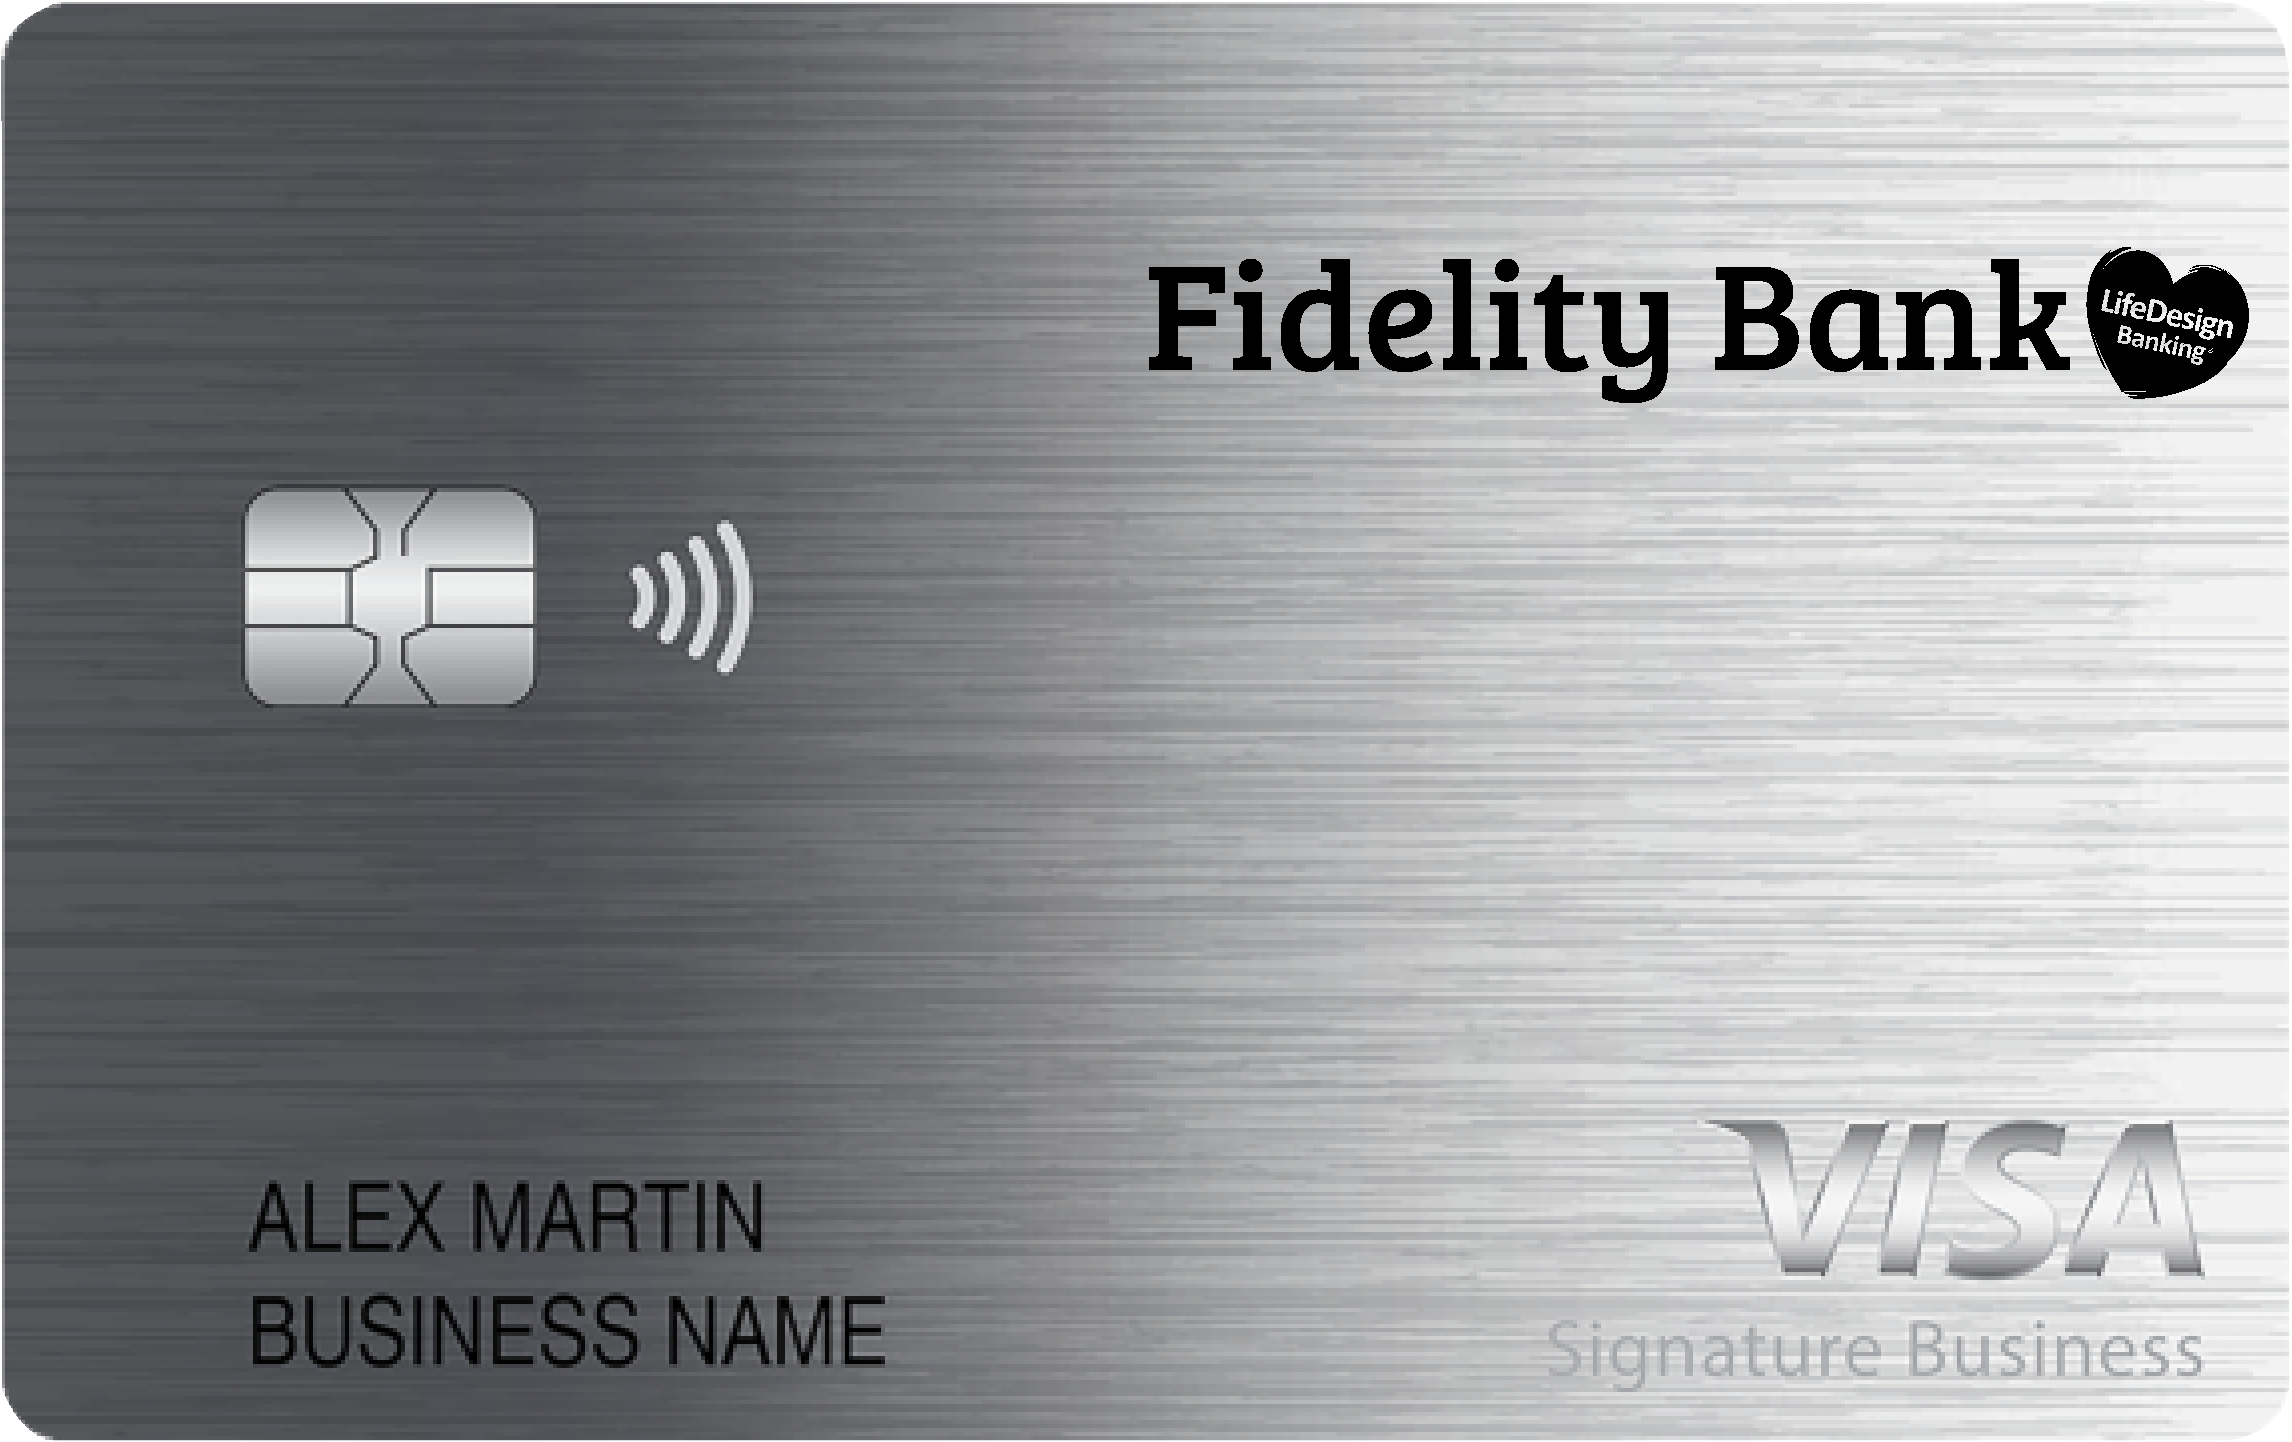 Fidelity Bank Smart Business Rewards Card